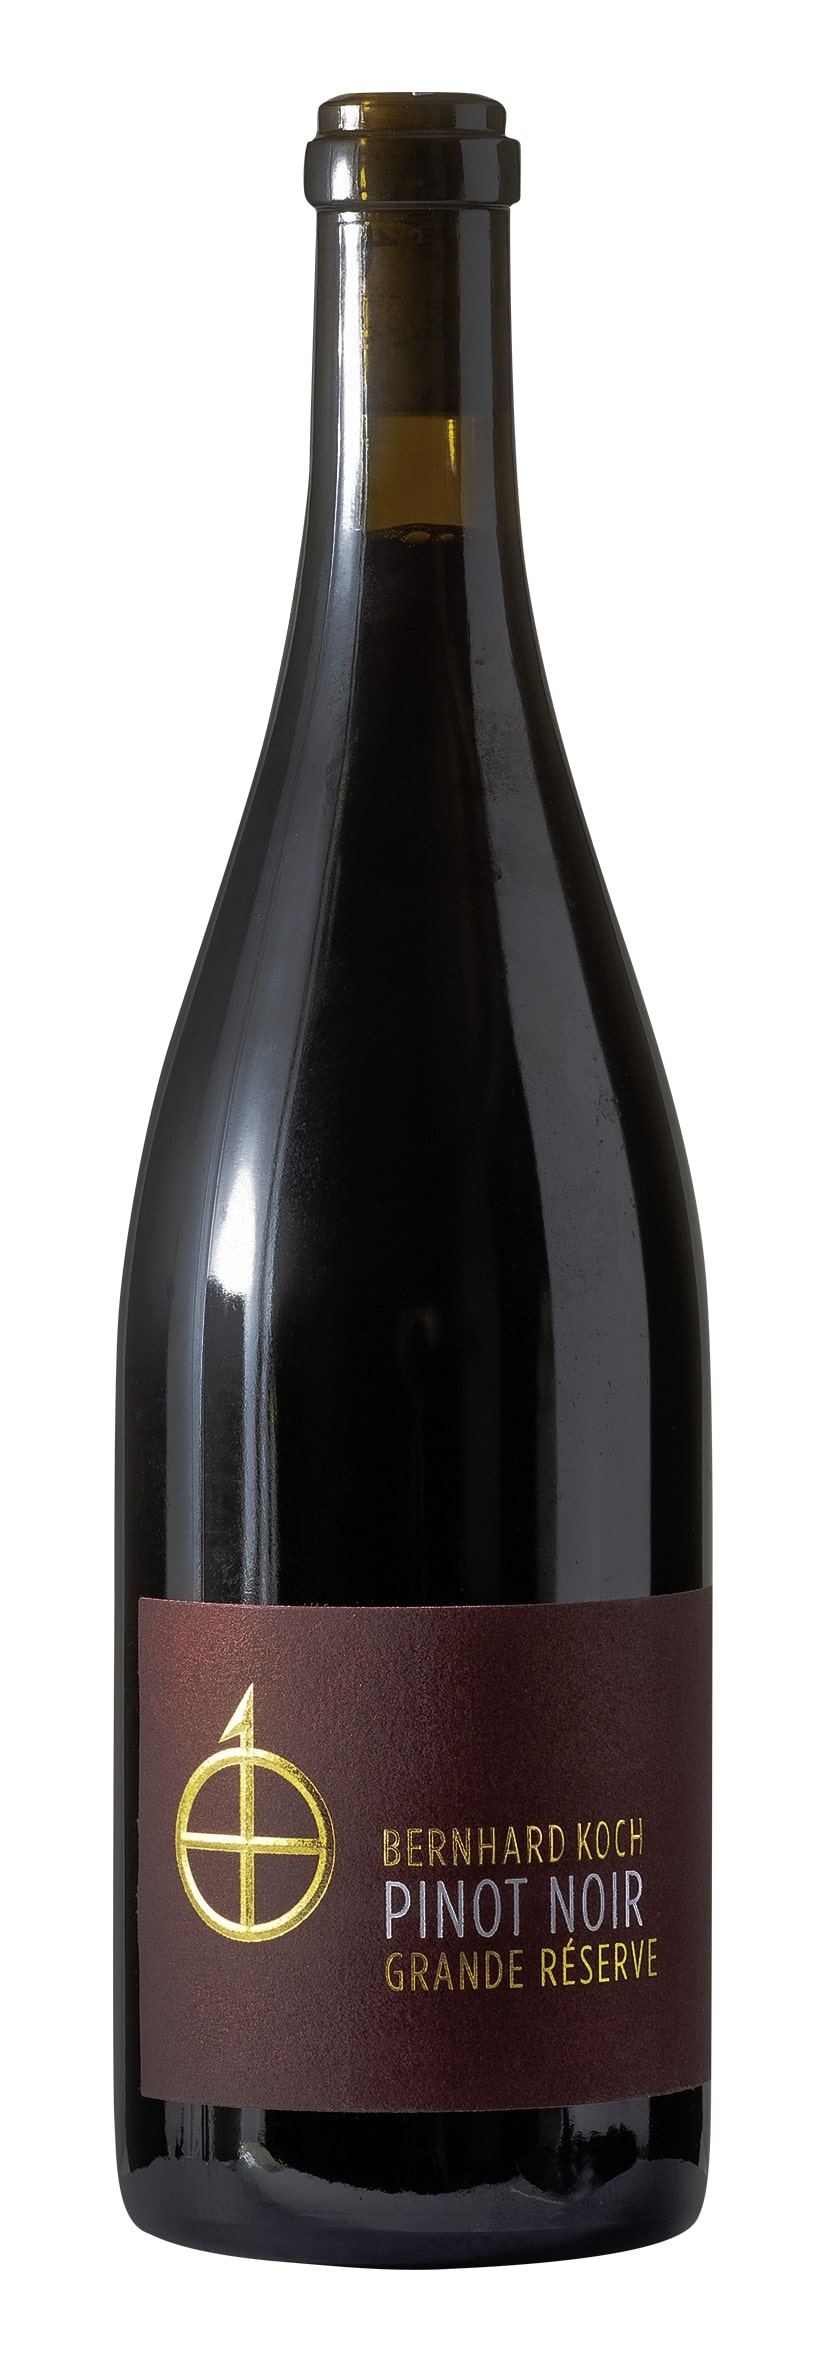 Hainfelder Letten Pinot Noir trocken Grande Réserve BK 2020